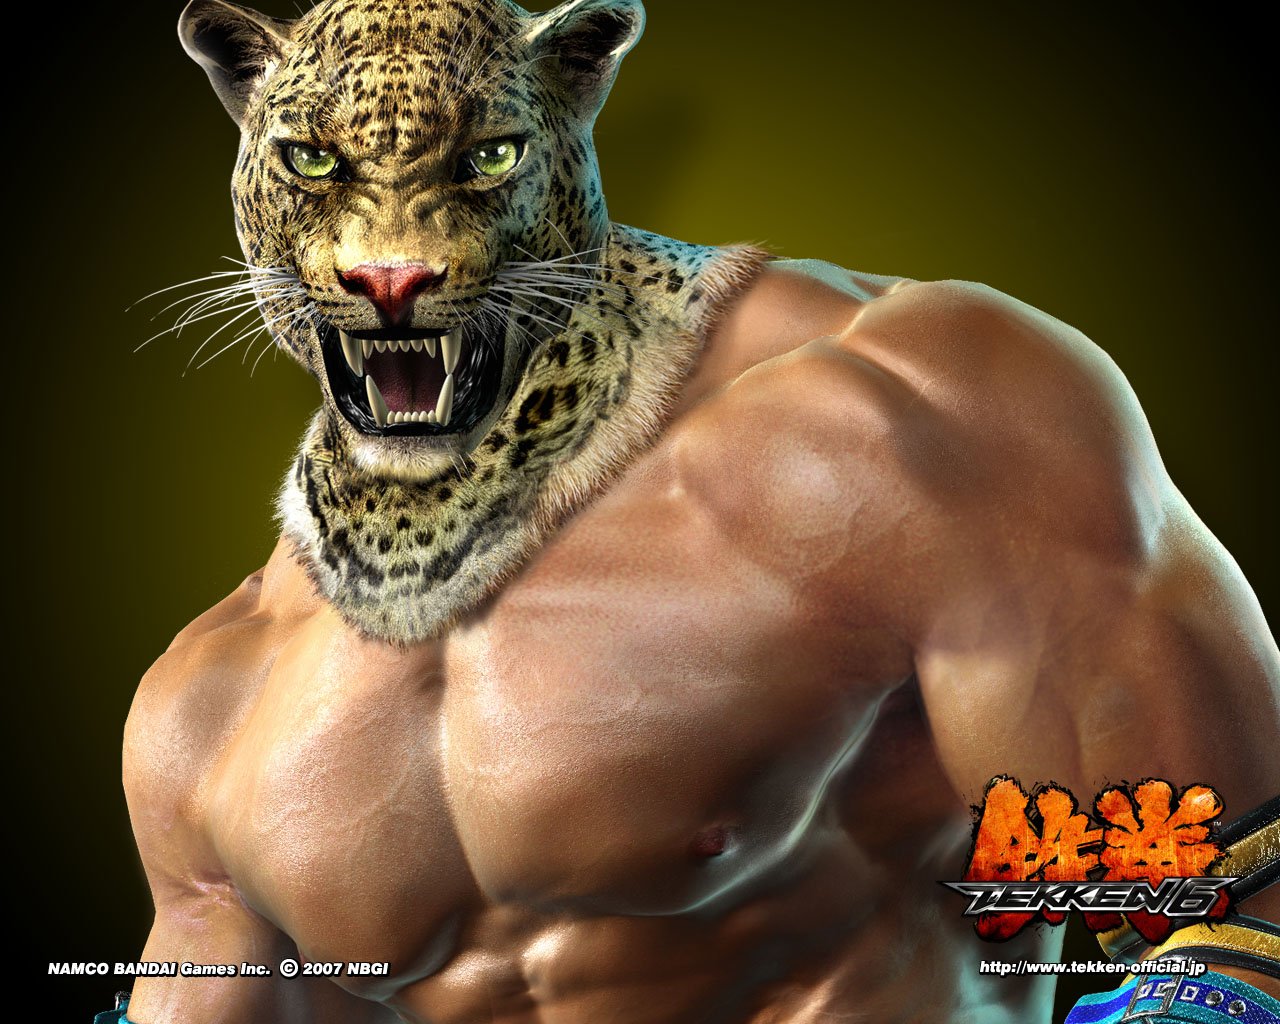 King Tekken 6 Wallpapers HD Wallpapers 1280x1024